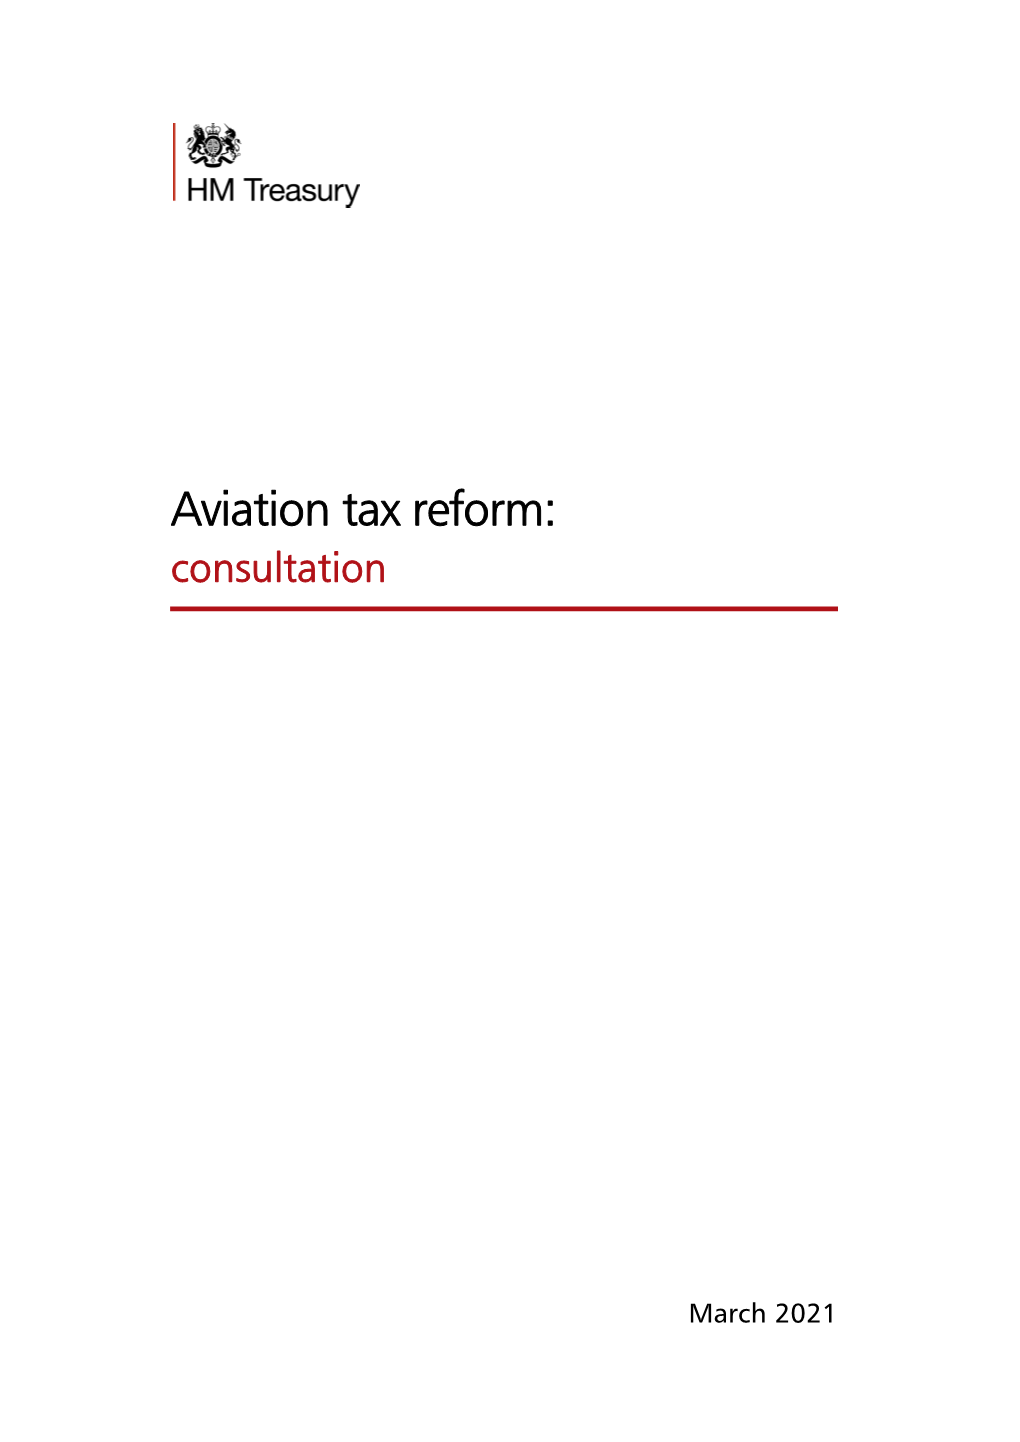 Aviation Tax Reform: Consultation